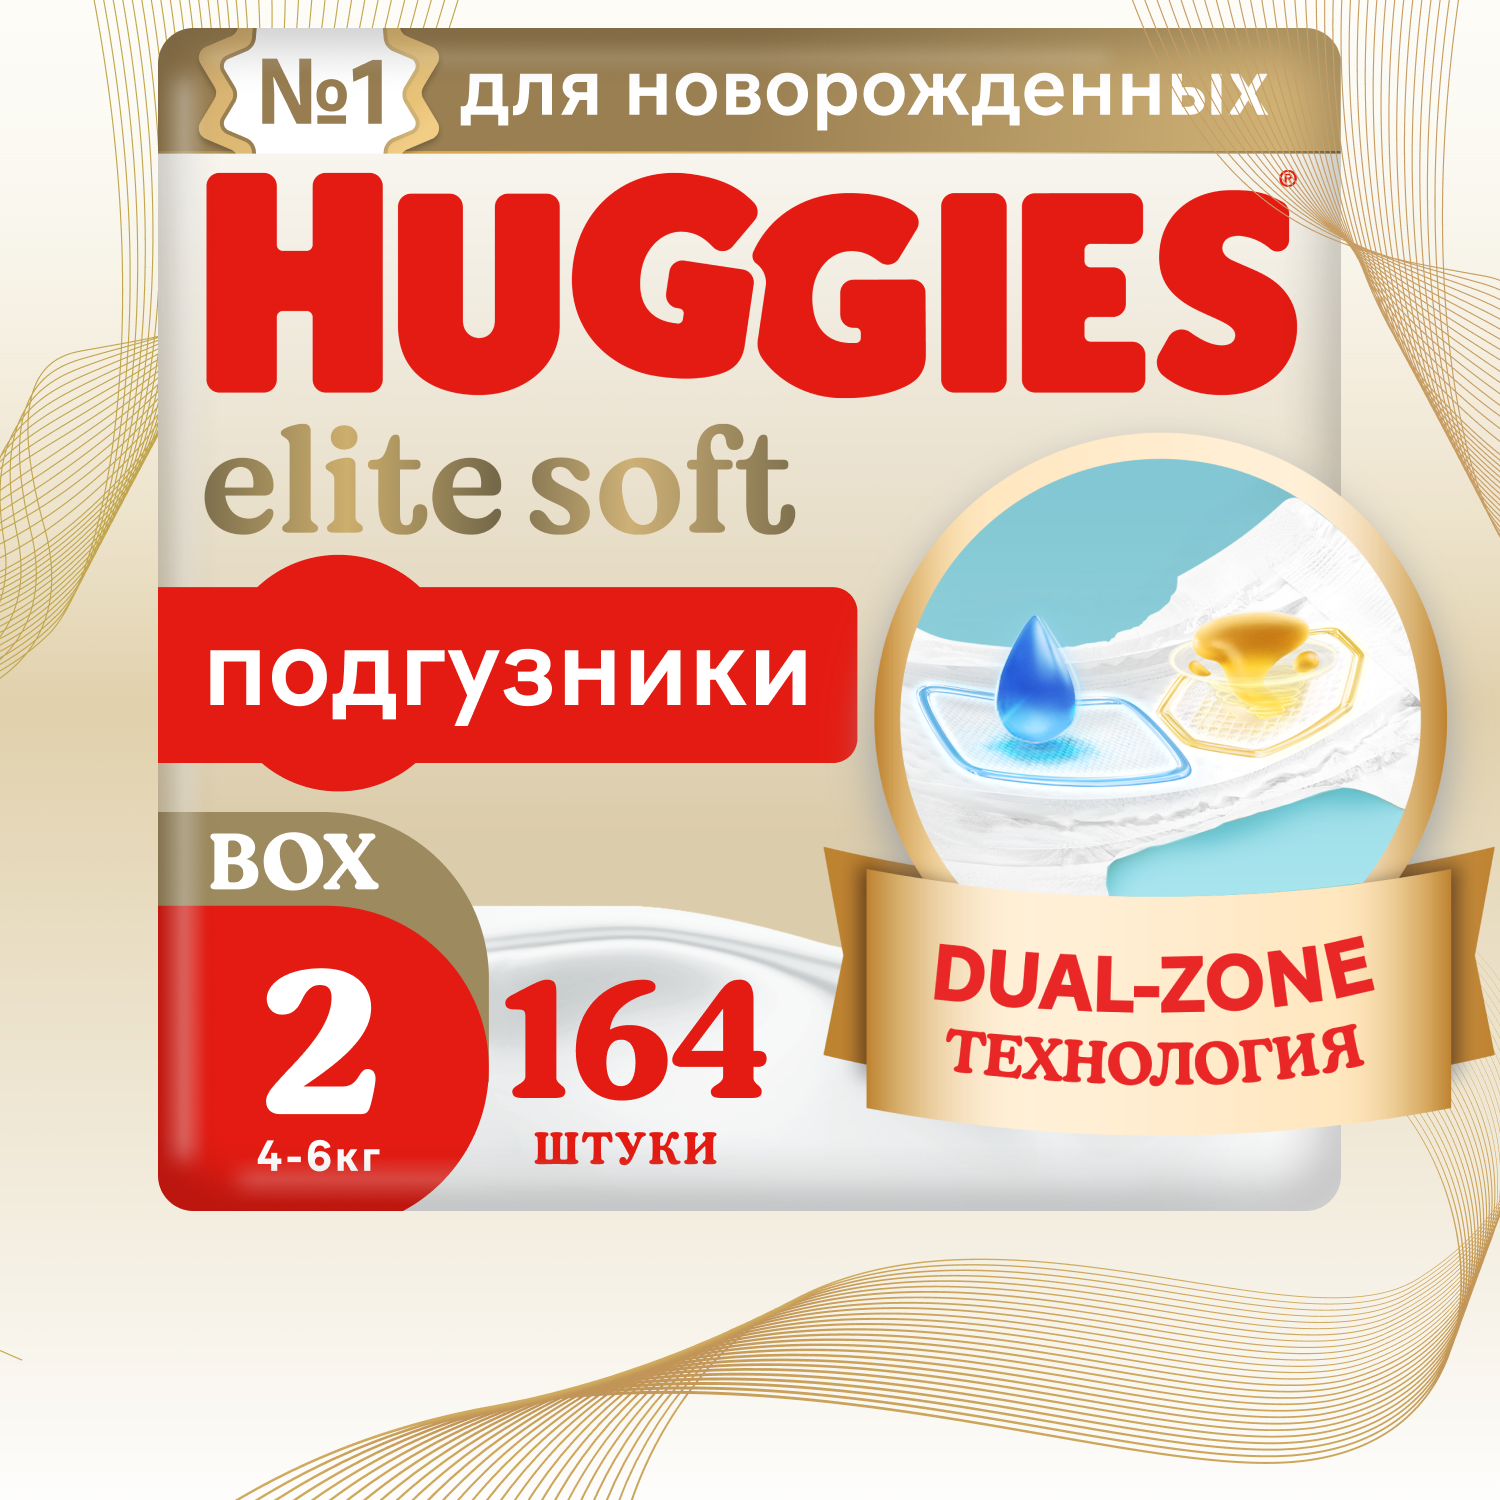 Подгузники Huggies Элит Софт 2 (4-6 кг) 164 BOX шт NEW